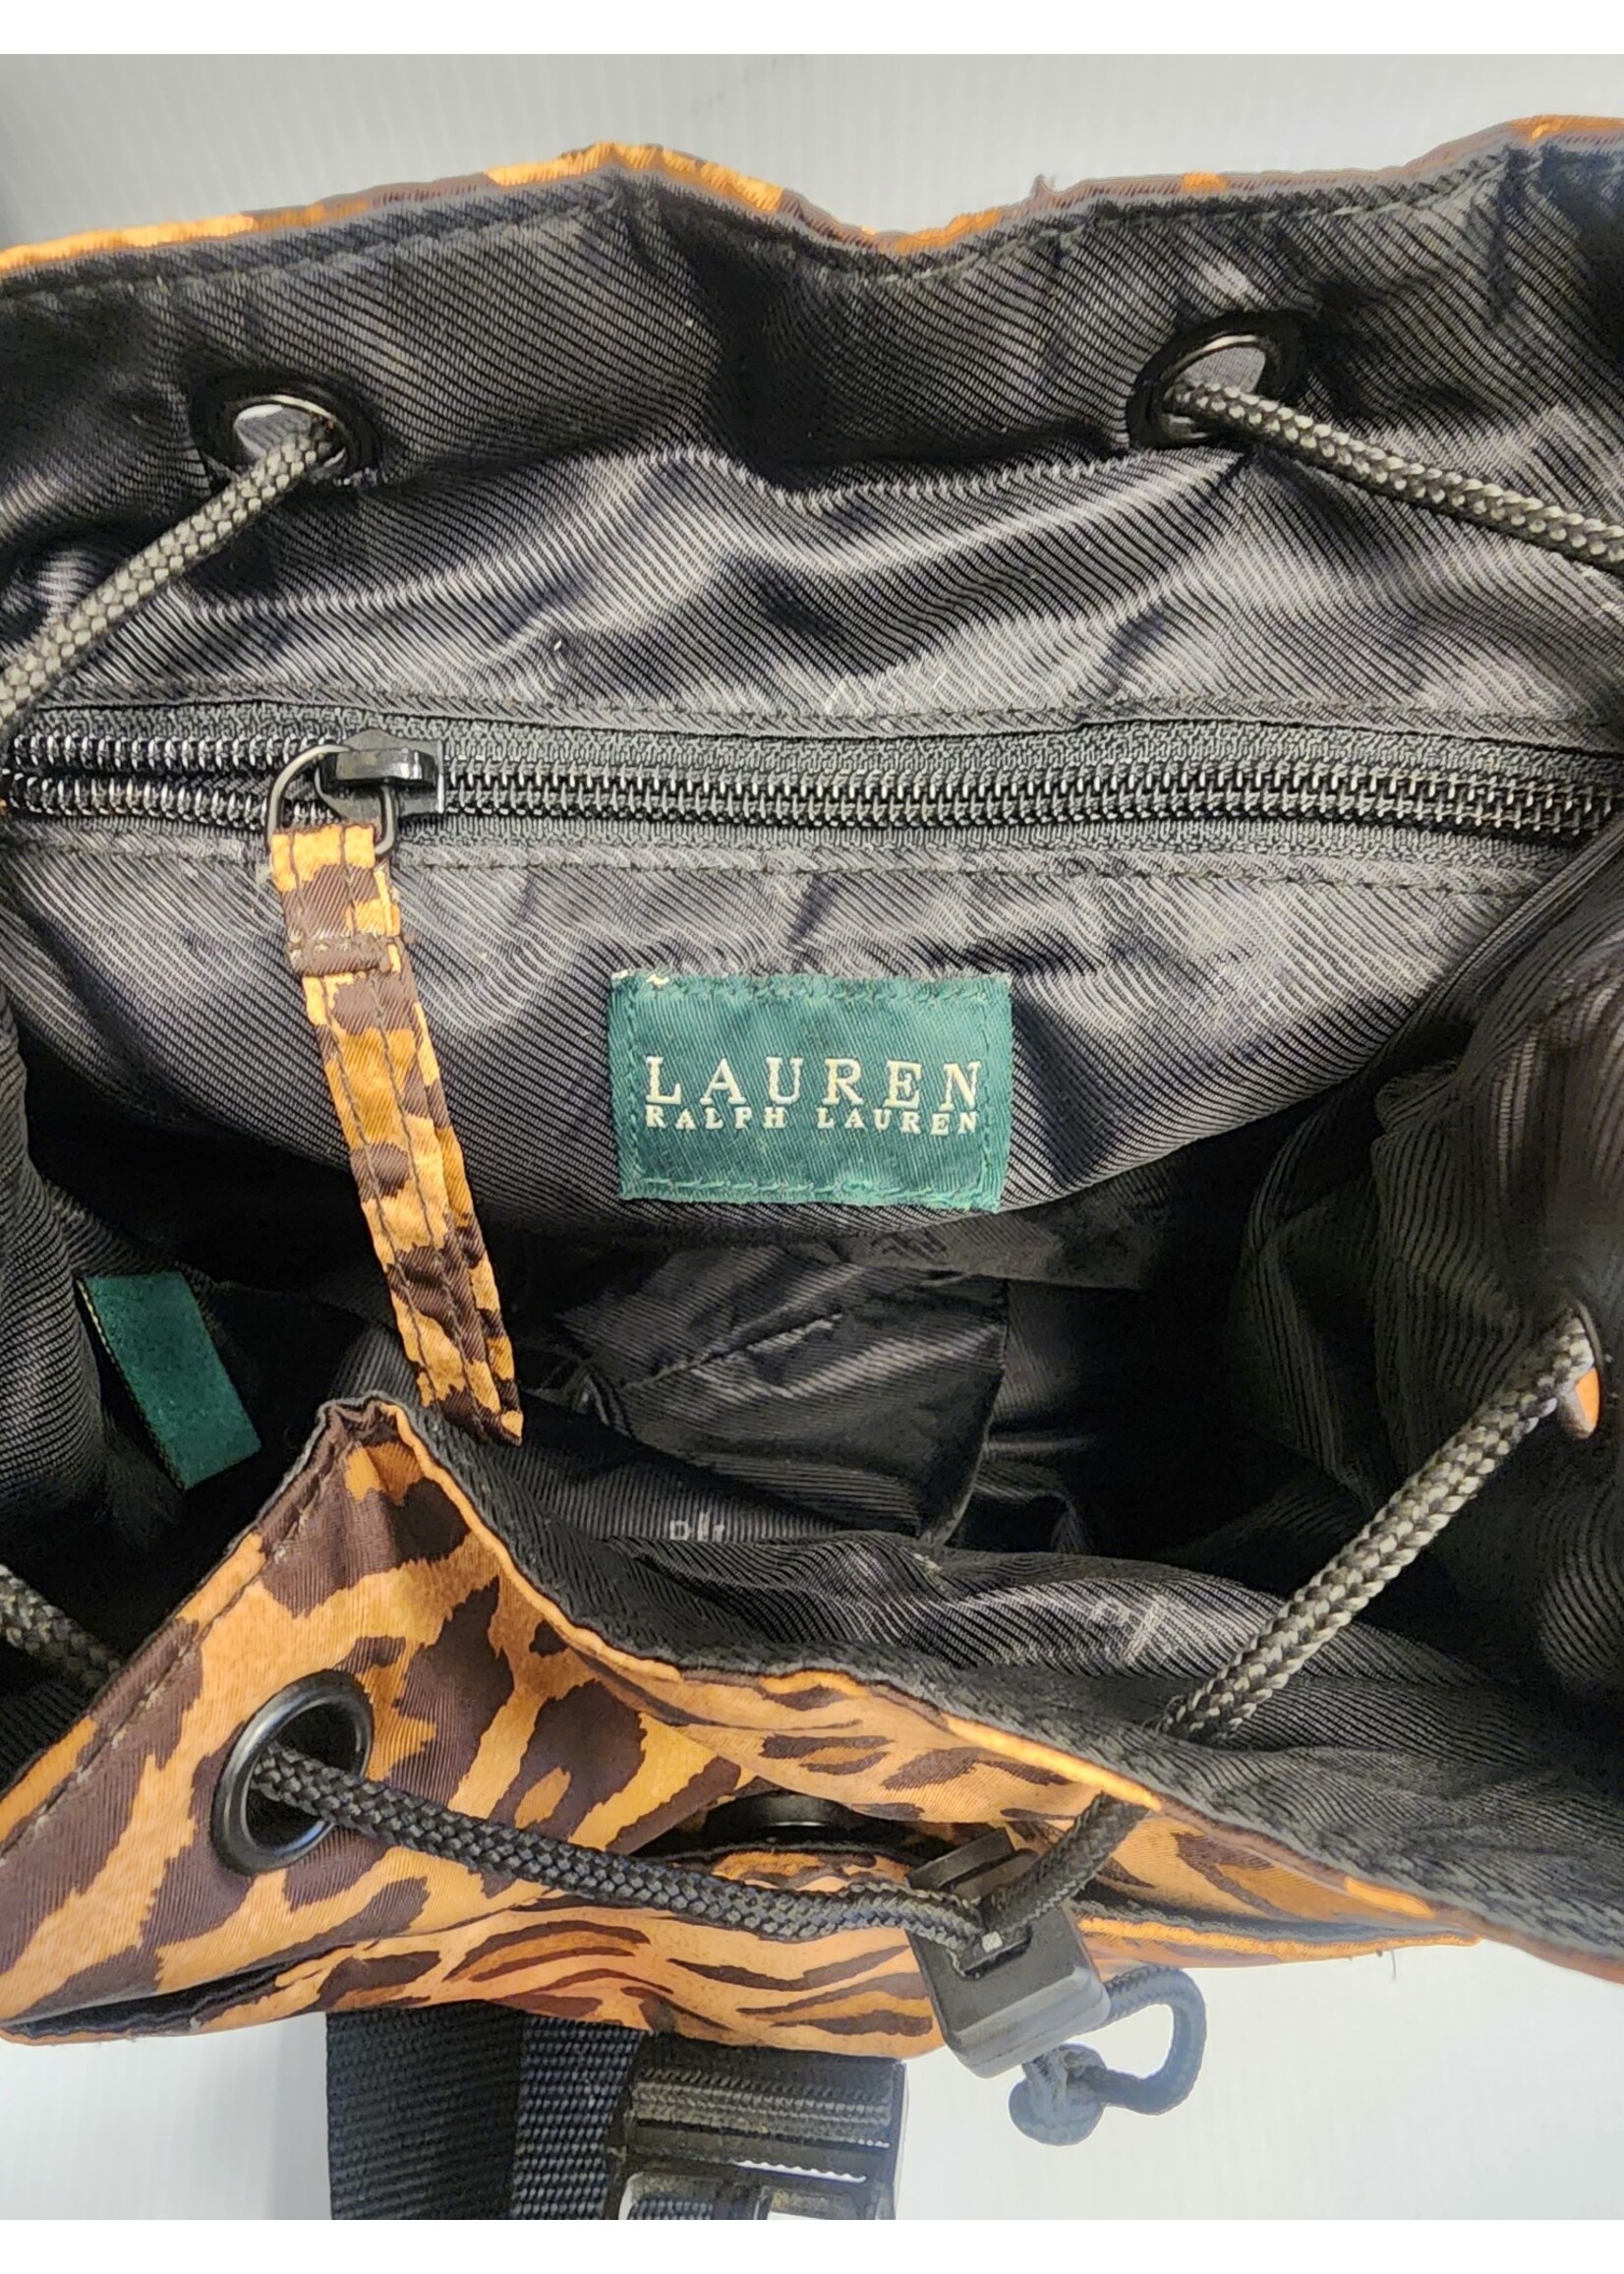 Polo Ralph Lauren Men's Leather Backpack - Macy's